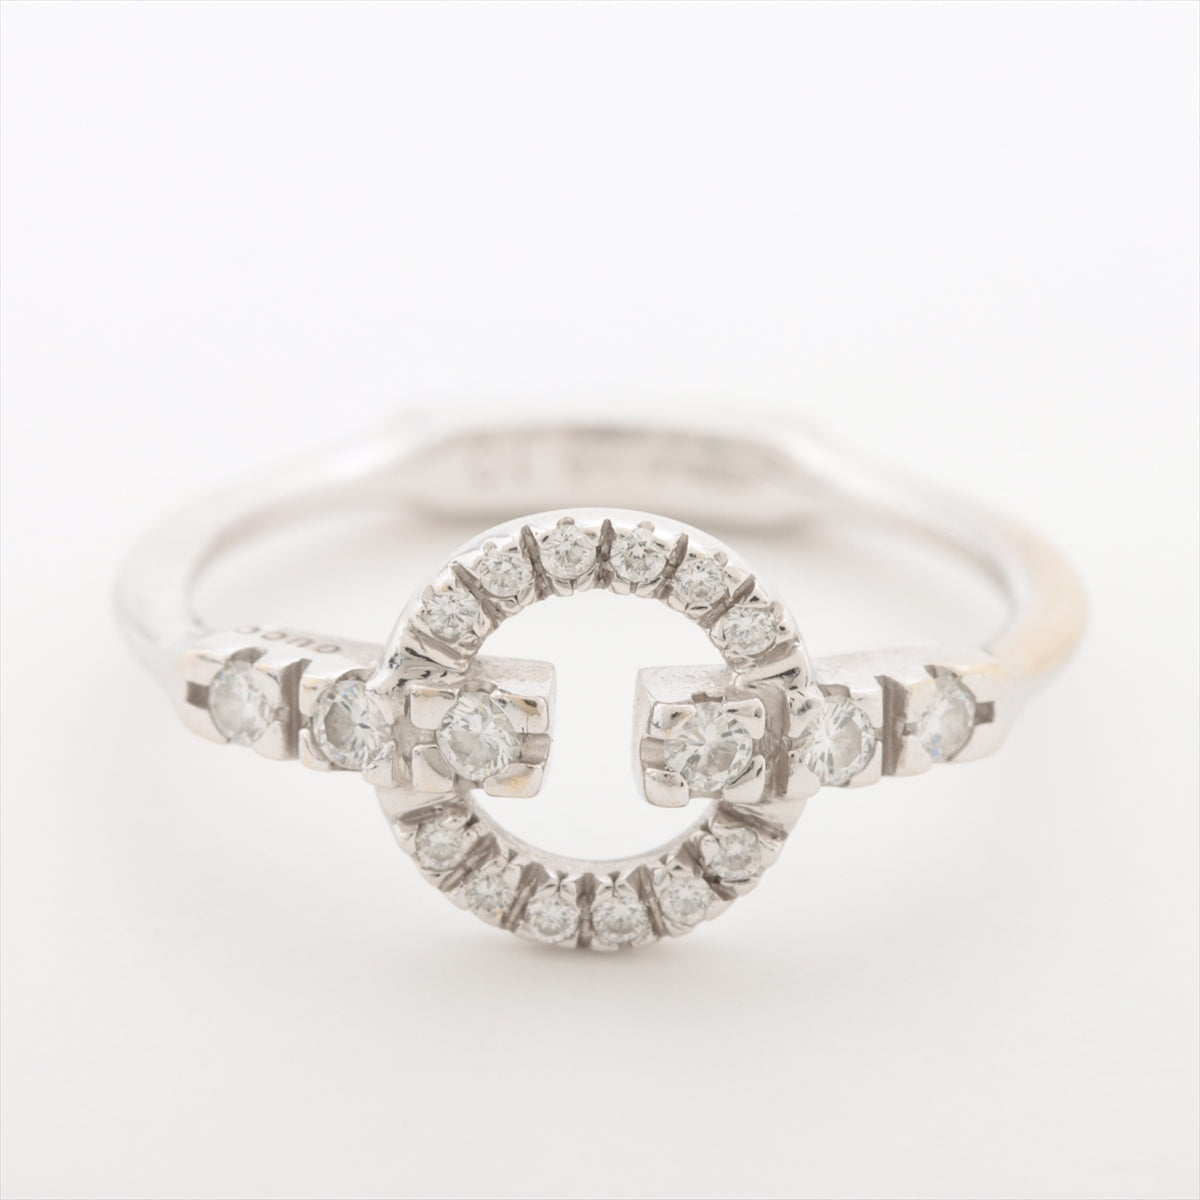 Gucci diamond rings 750(WG) 2.5g 10 Engraving blur